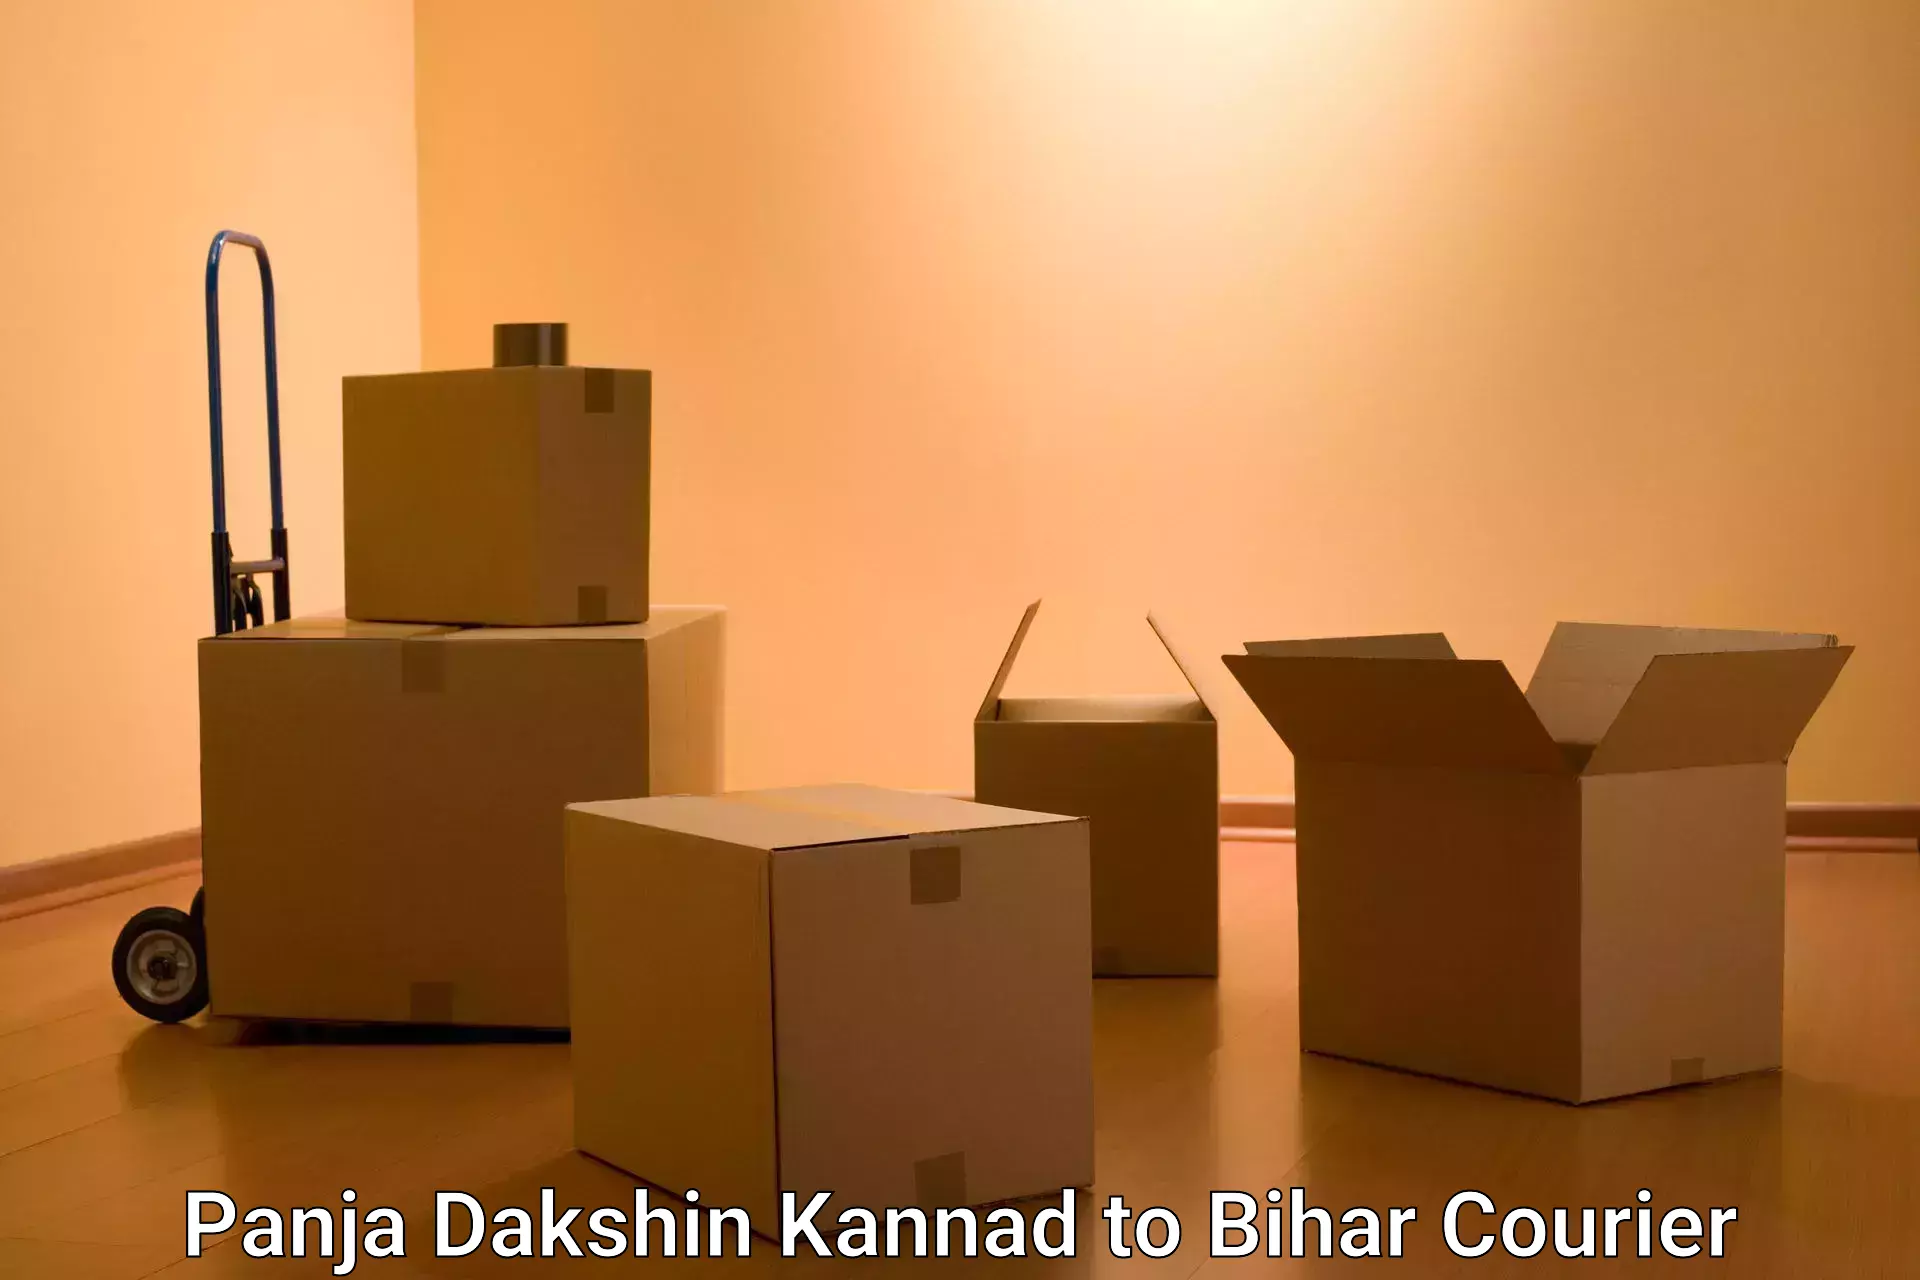 24-hour courier service Panja Dakshin Kannad to Aurangabad Bihar